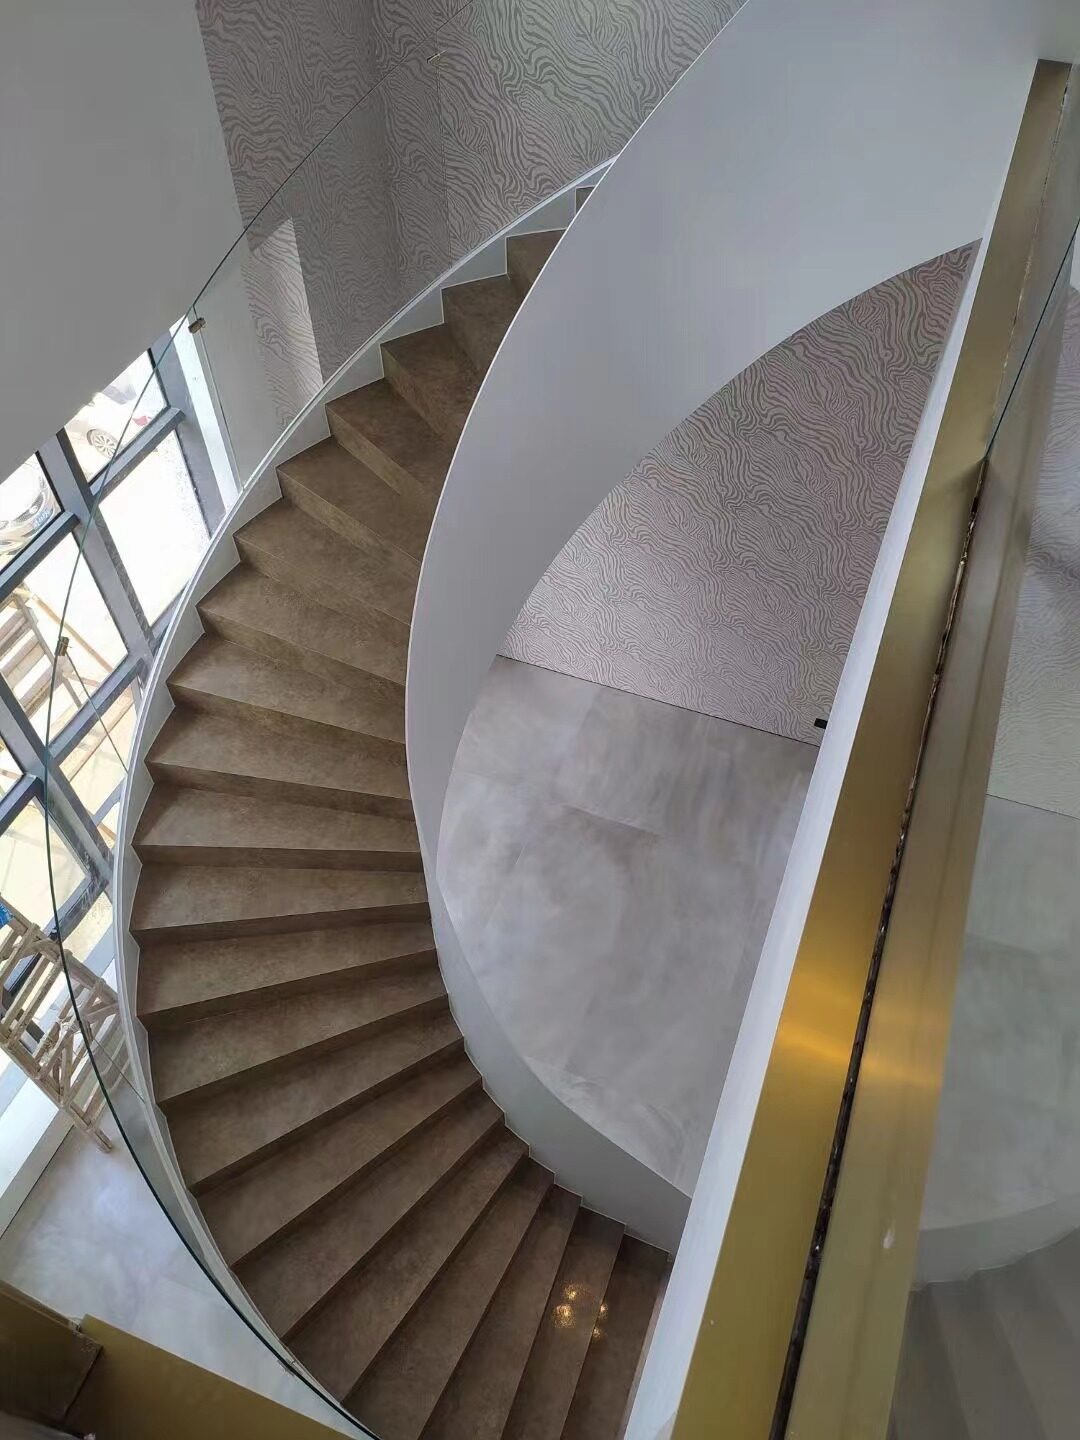 spiral stair fabricators, spiral stair manufacturers